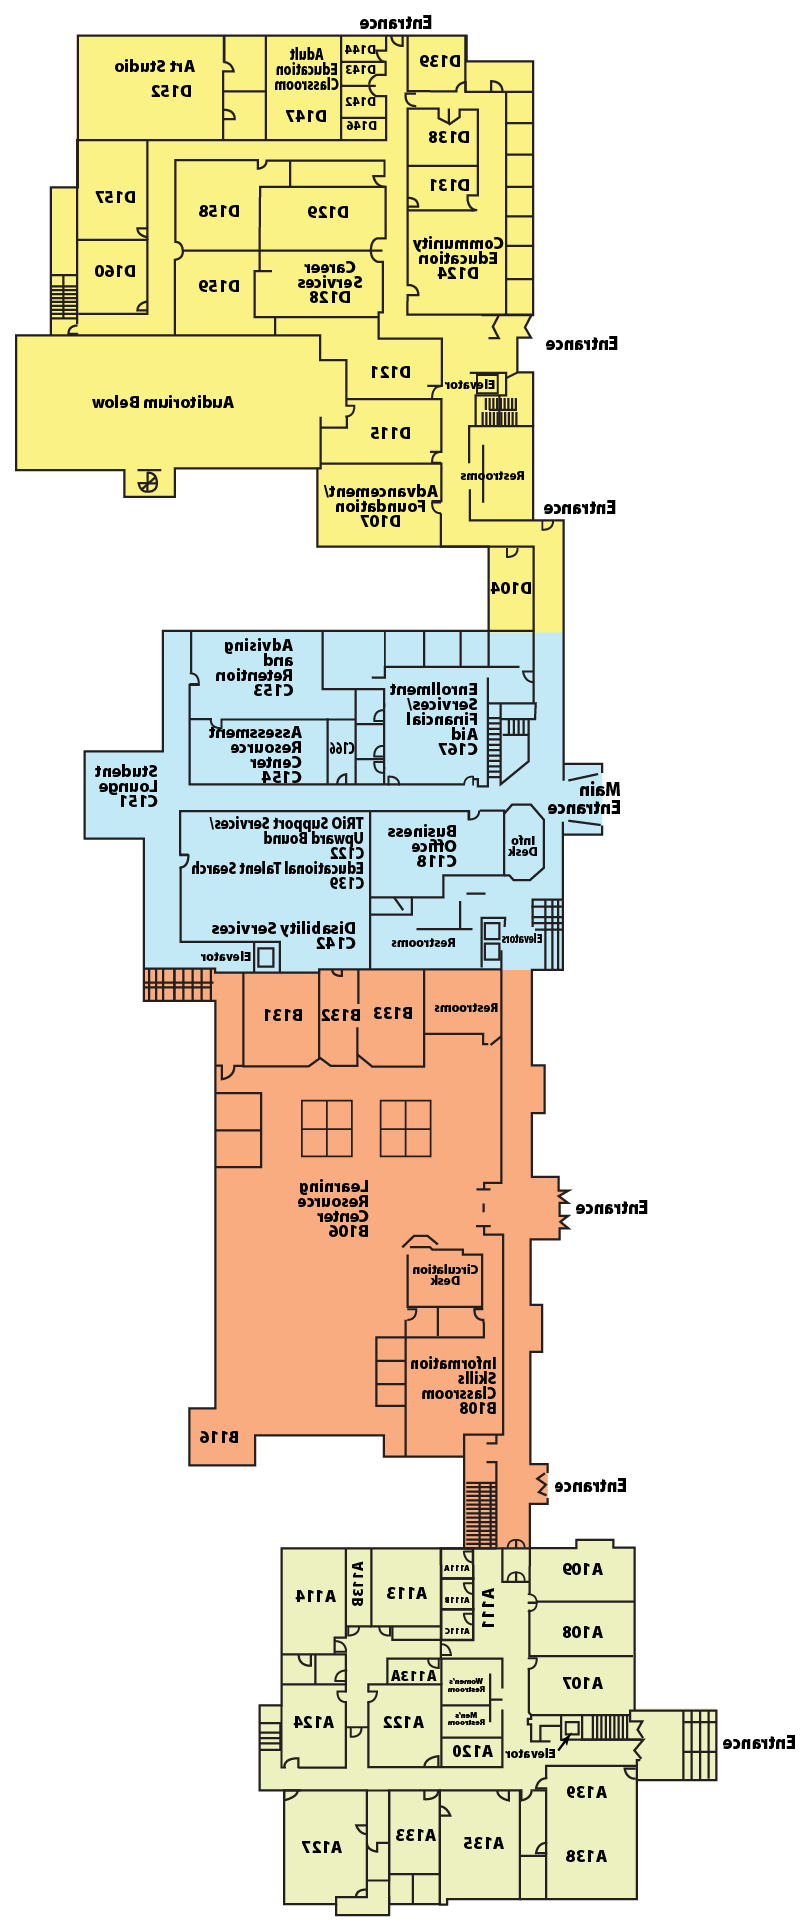 JWCC Campus Map- Main Level